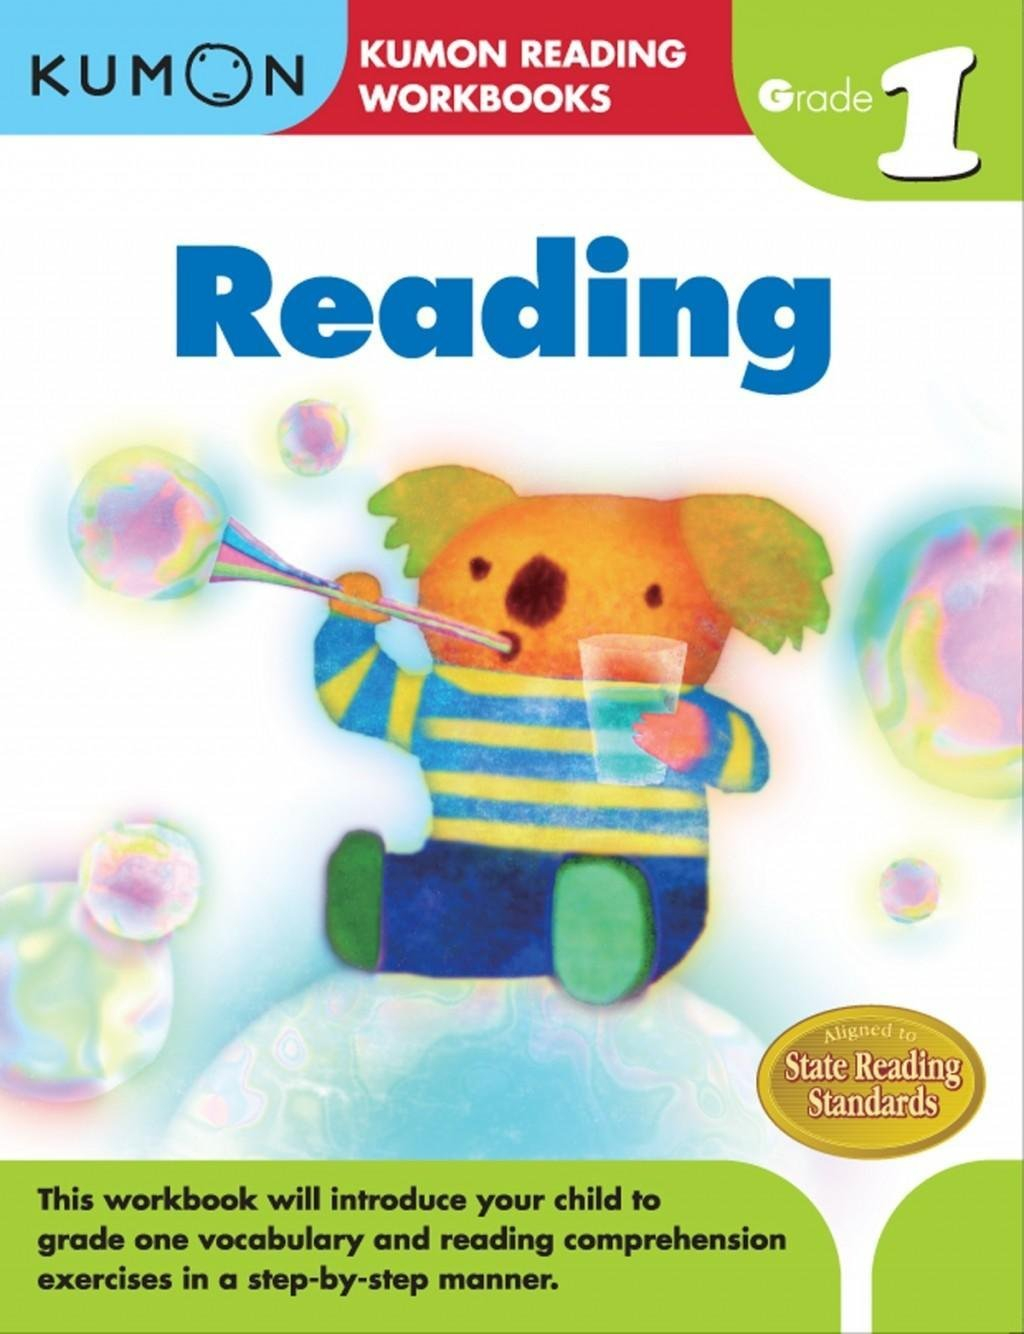 Kumon Publishing  Kumon Publishing  Reading Workbooks For Kumon Reading Worksheets Free Download